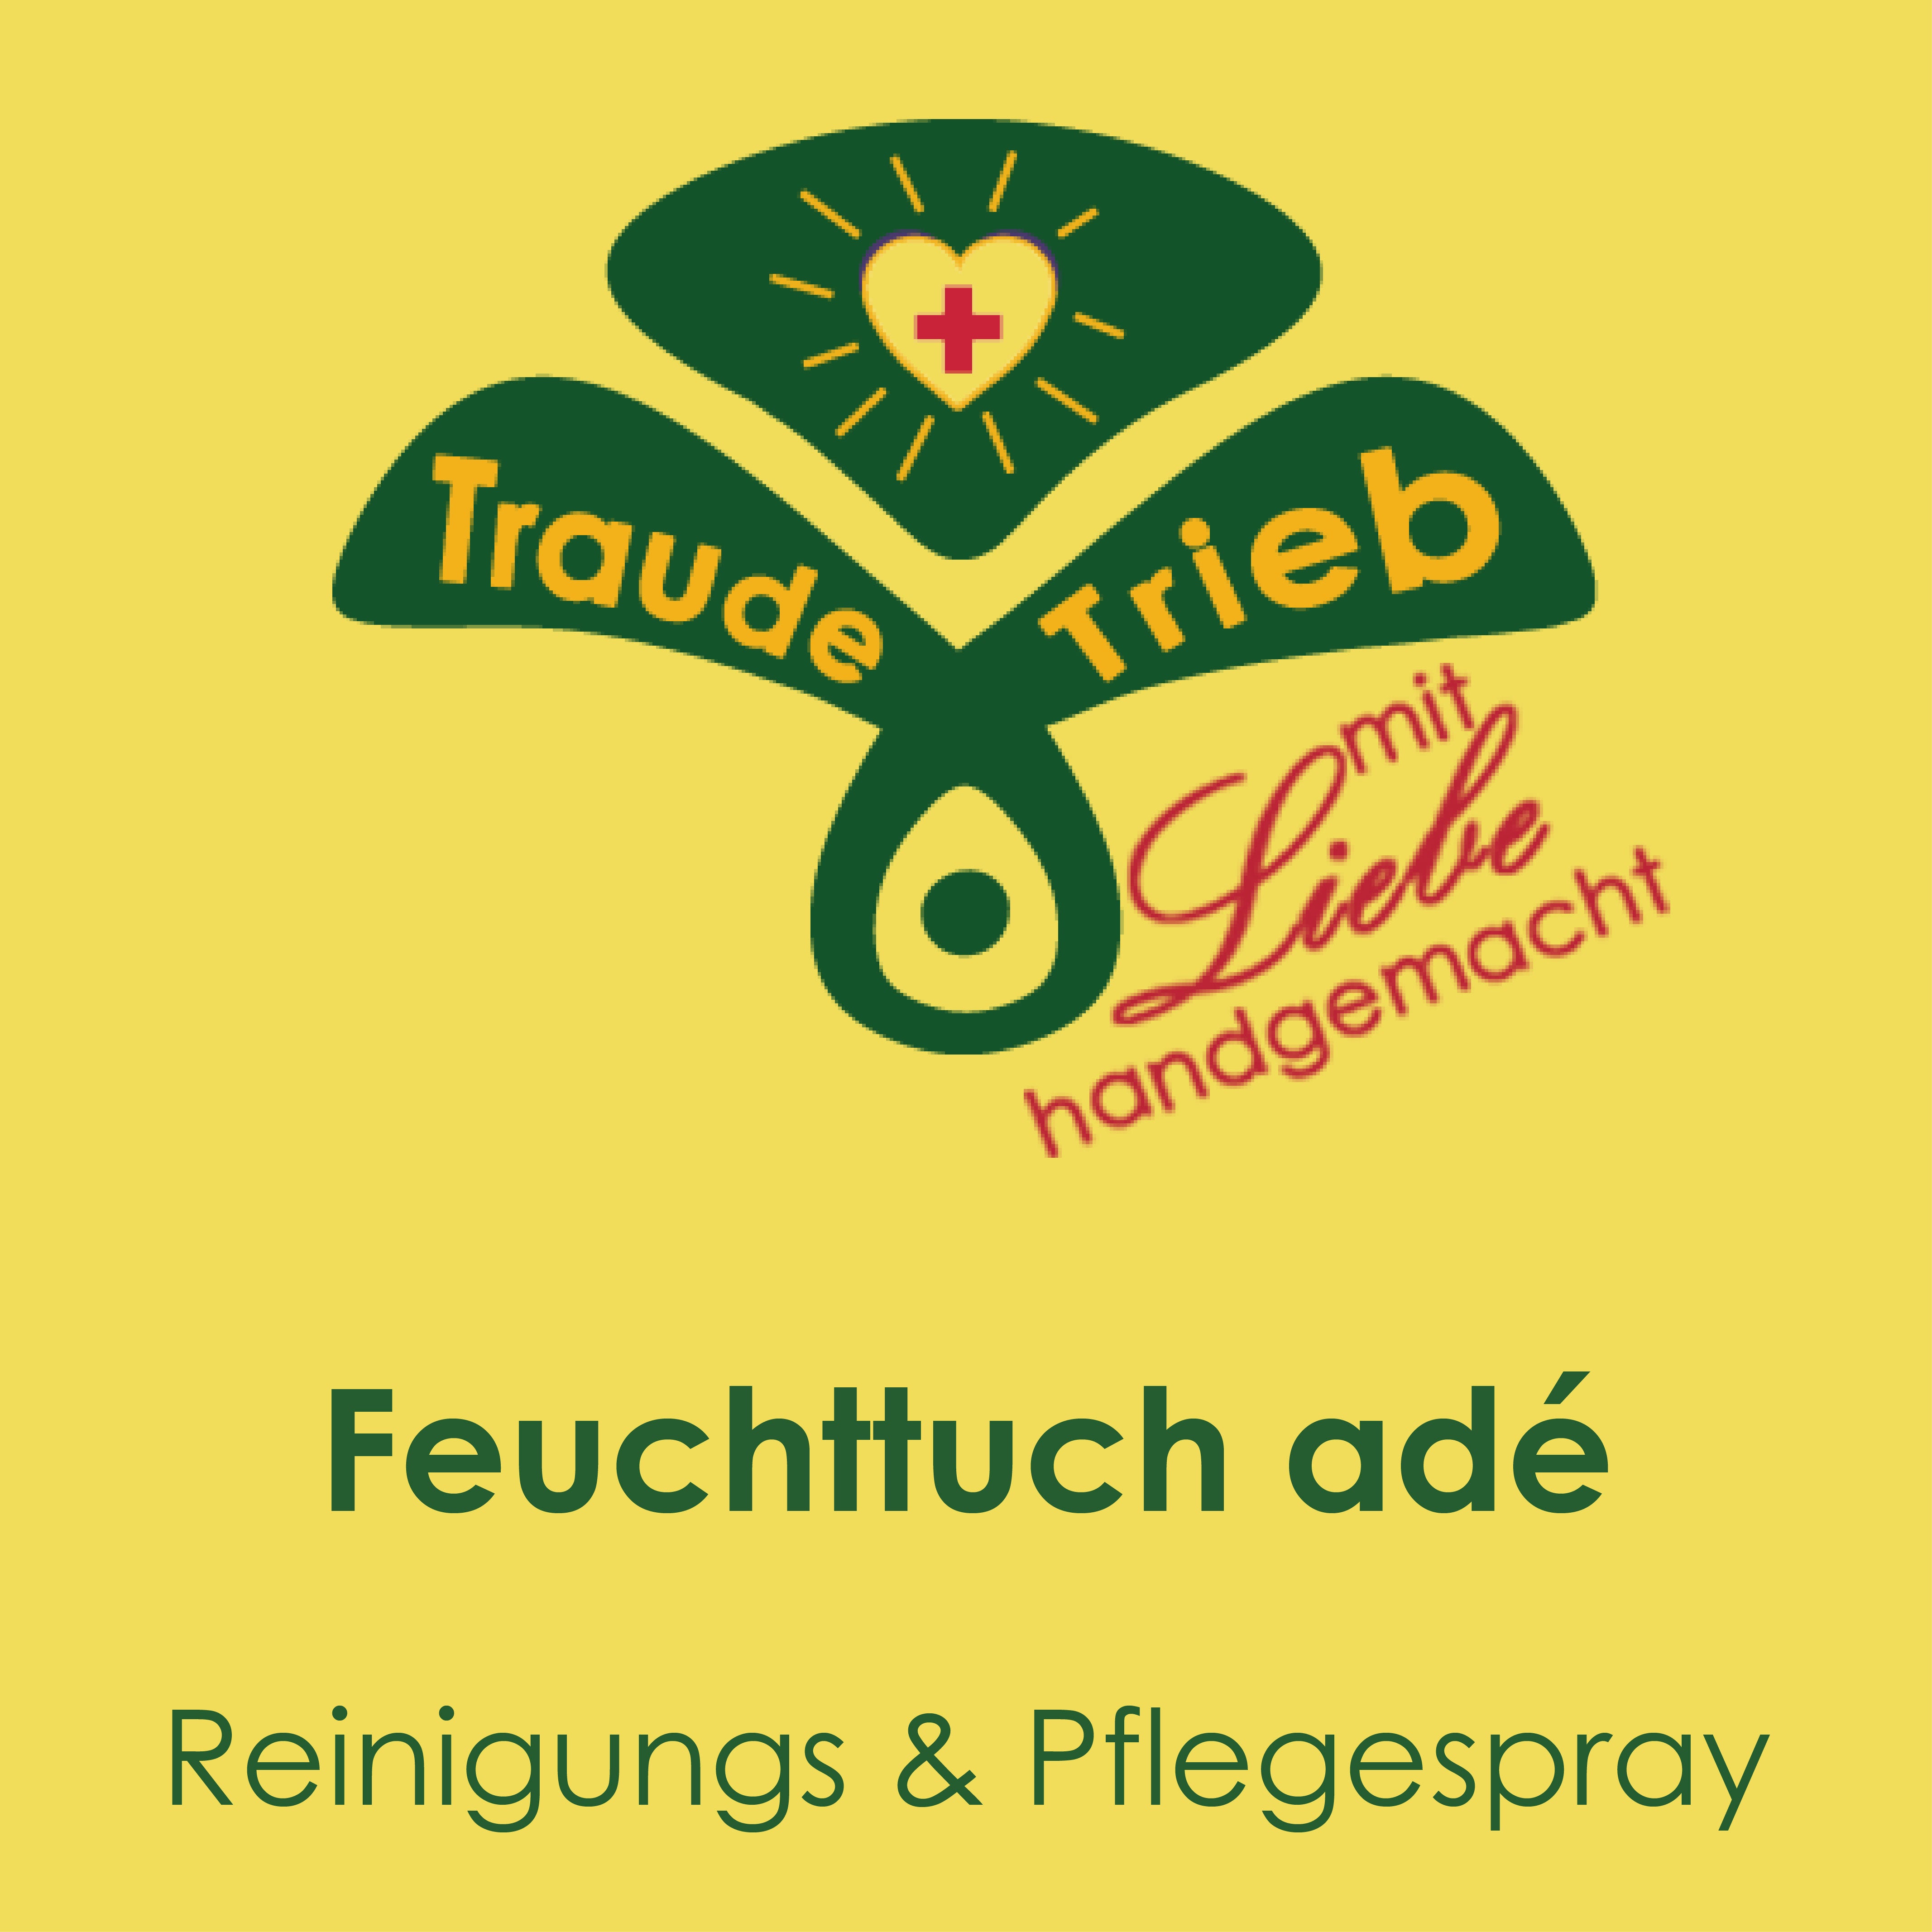 Feuchttuch adé Reinigungs- & Pflegespray – Traude Trieb Shop